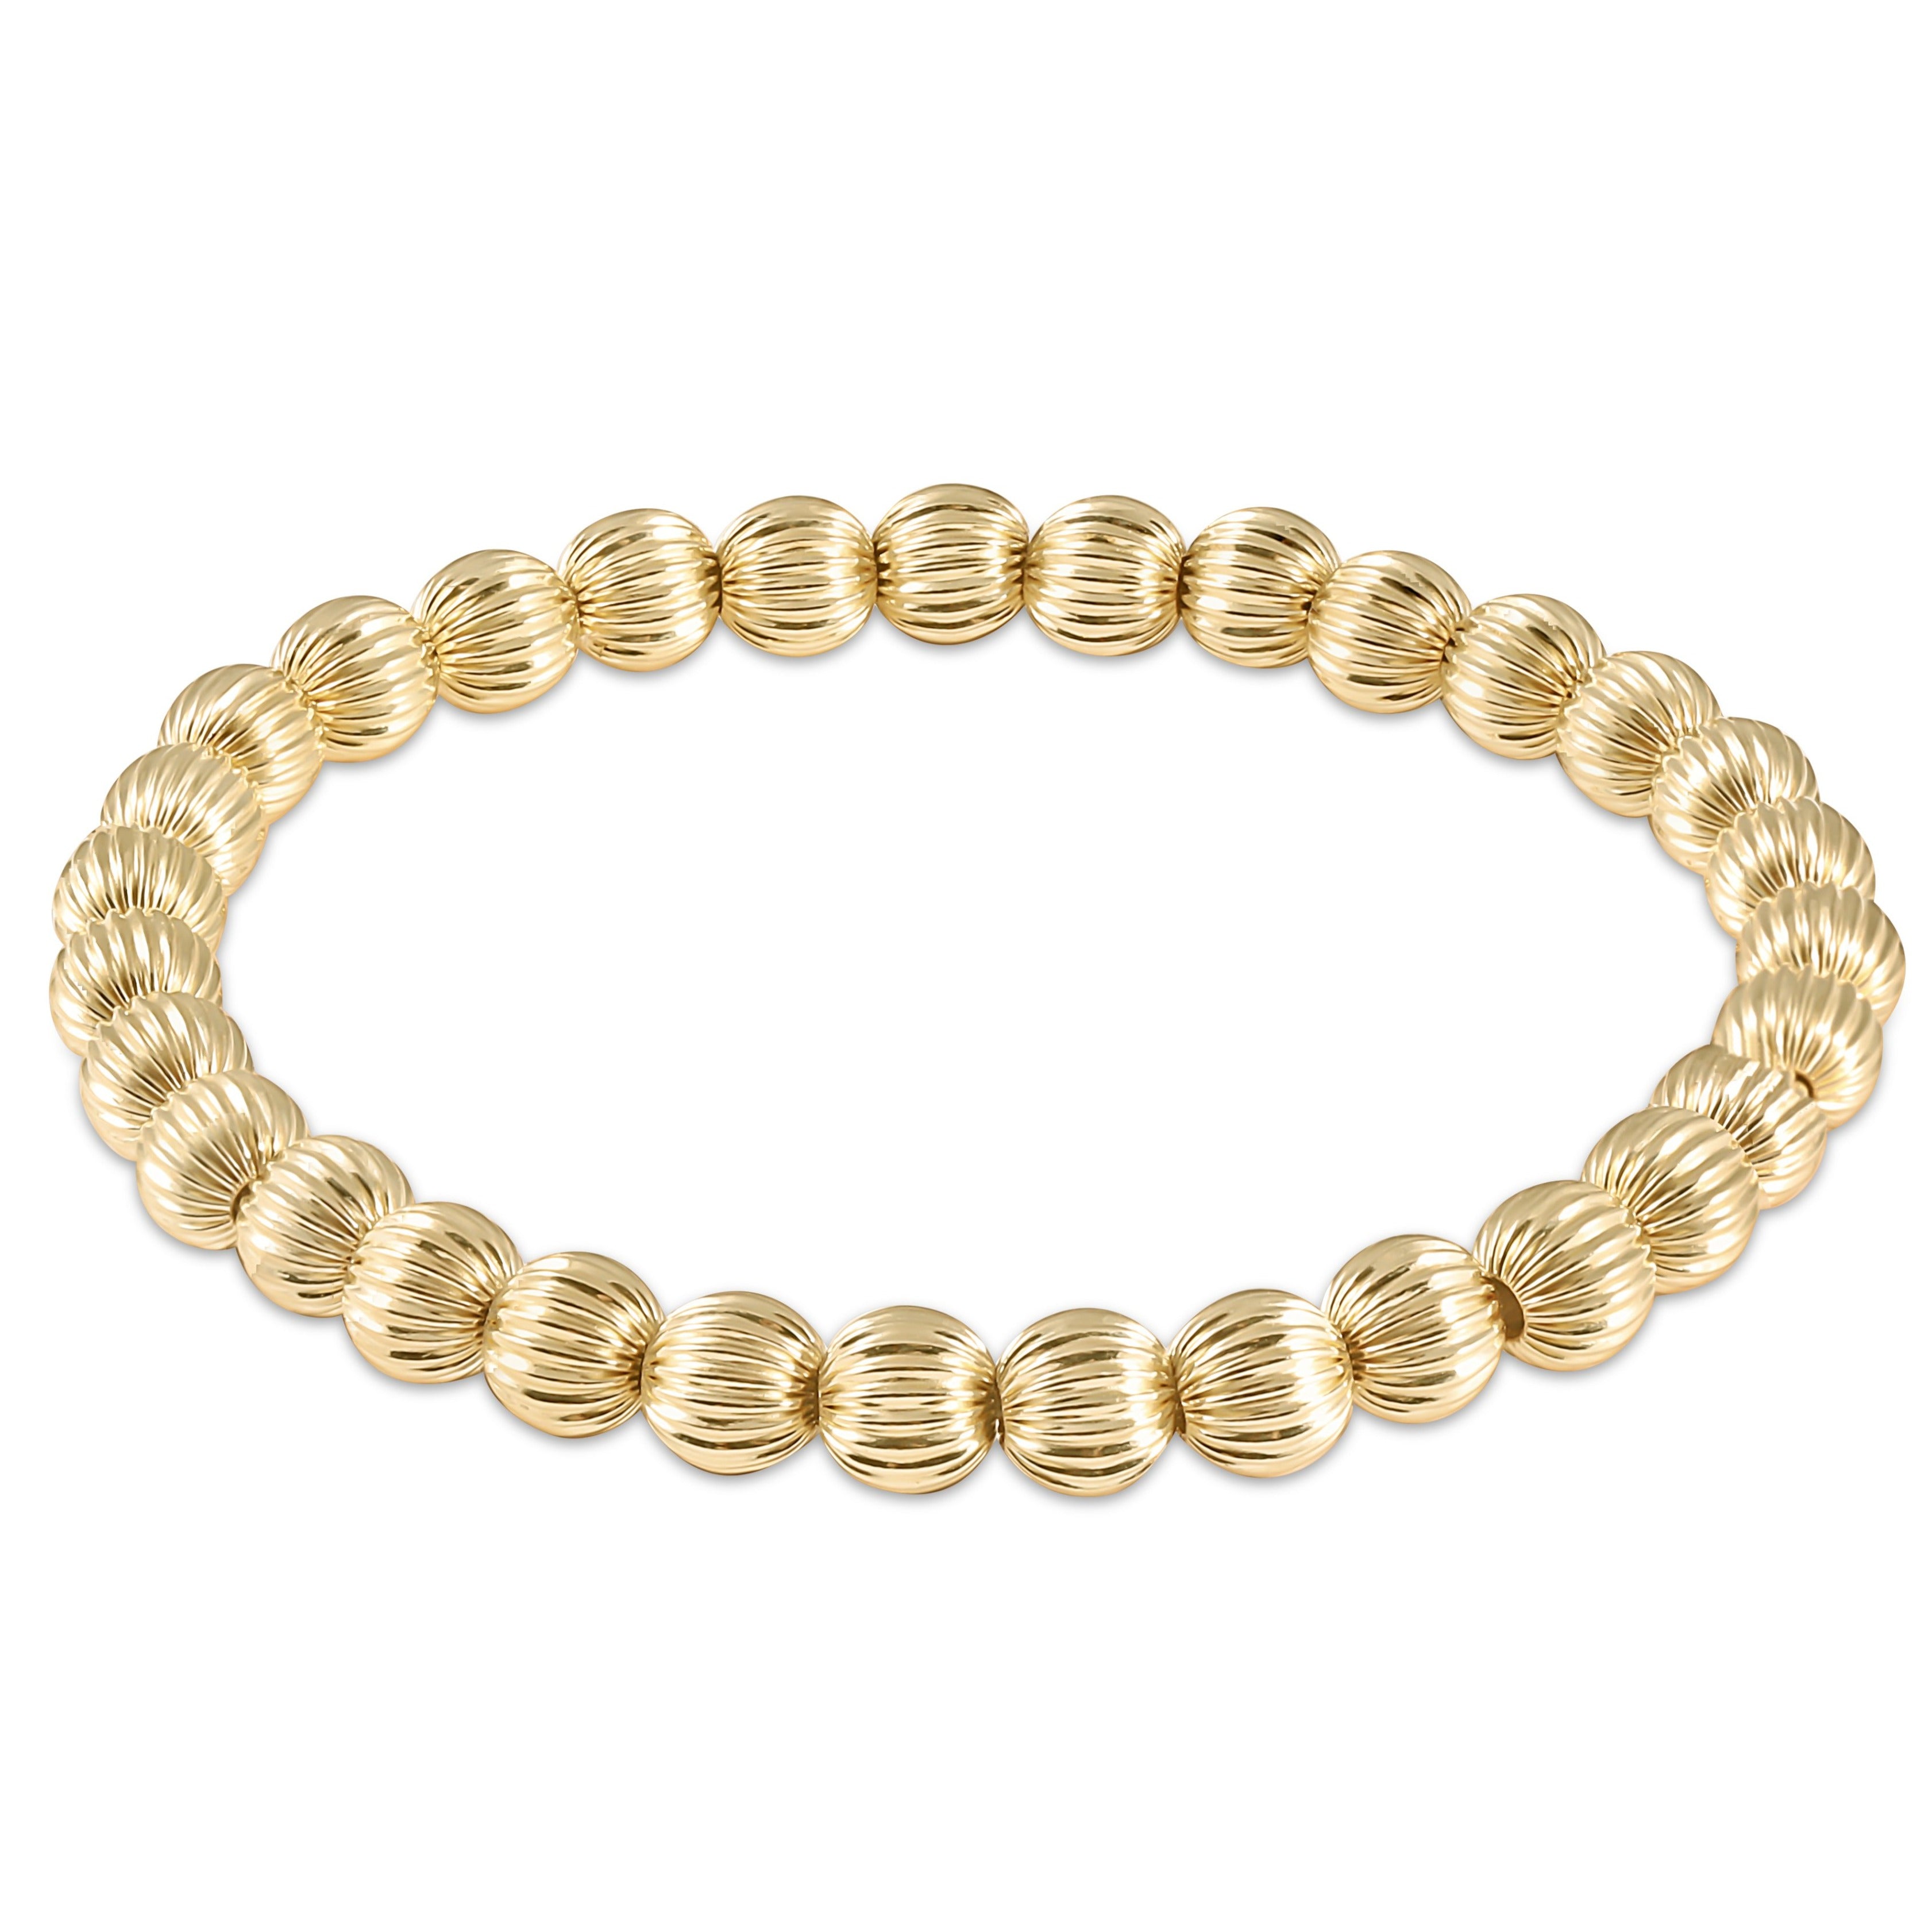 enewton extends - dignity gold 6mm bead bracelet